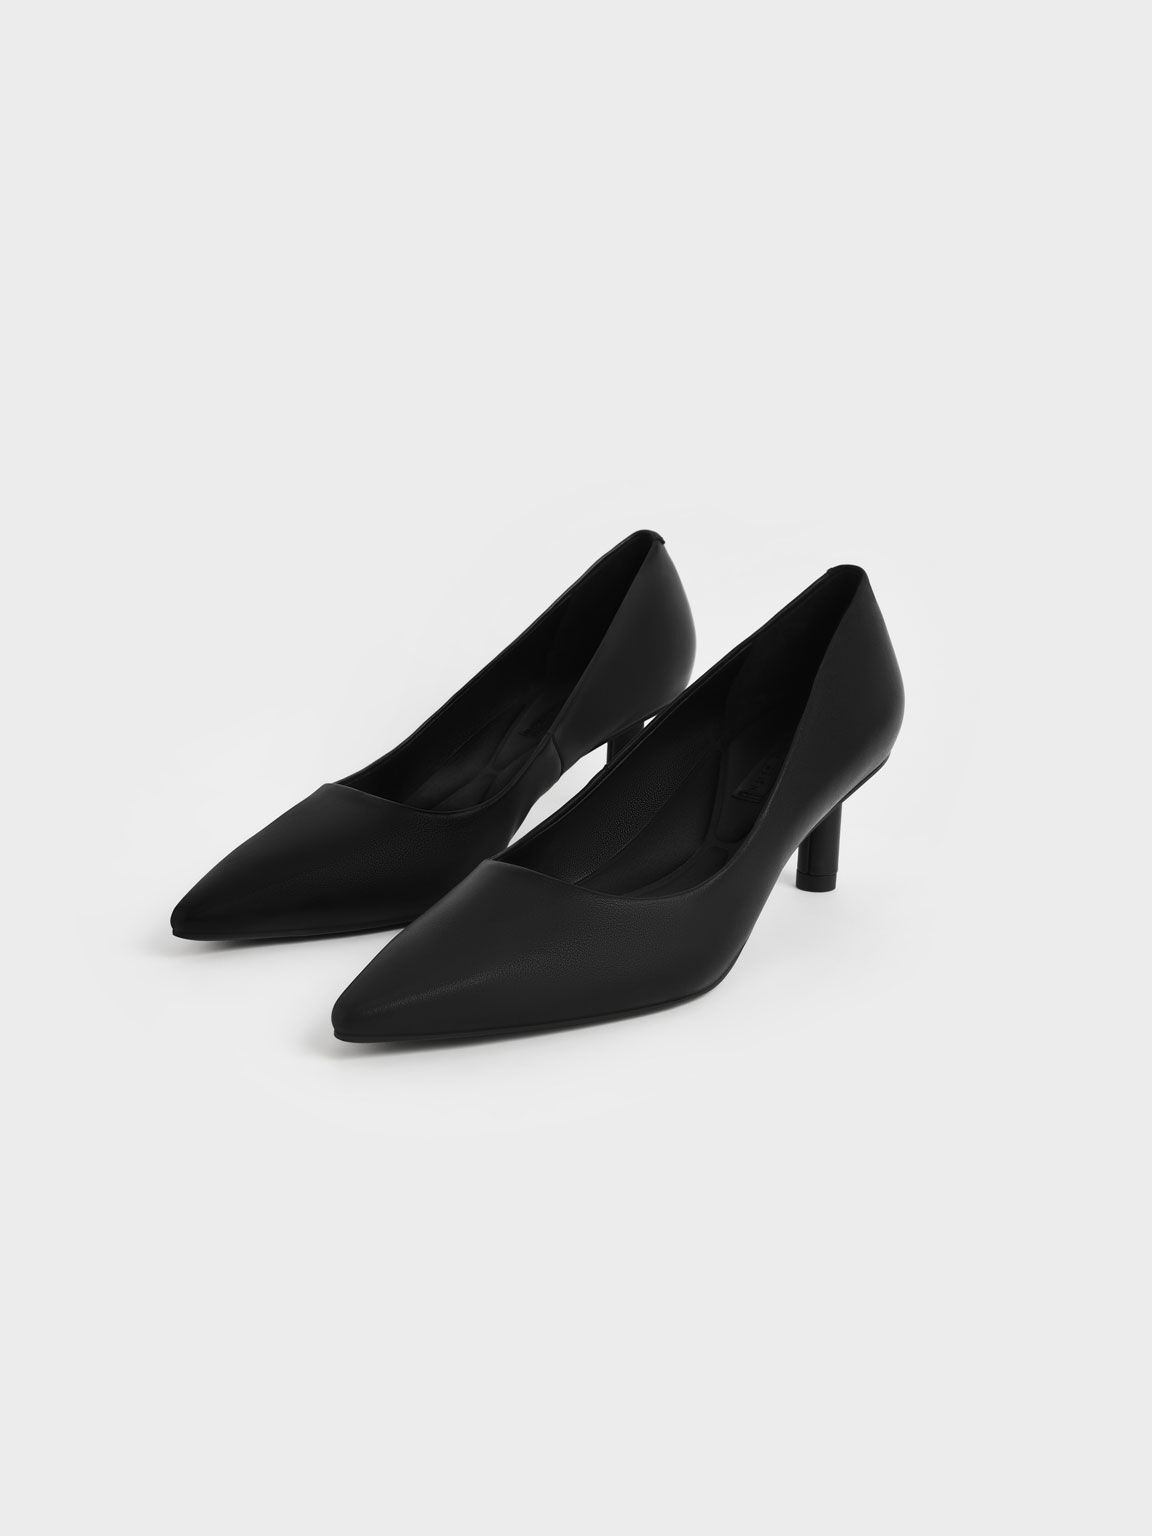 Sepatu Pumps Cylindrical Kitten Heel, Black, hi-res